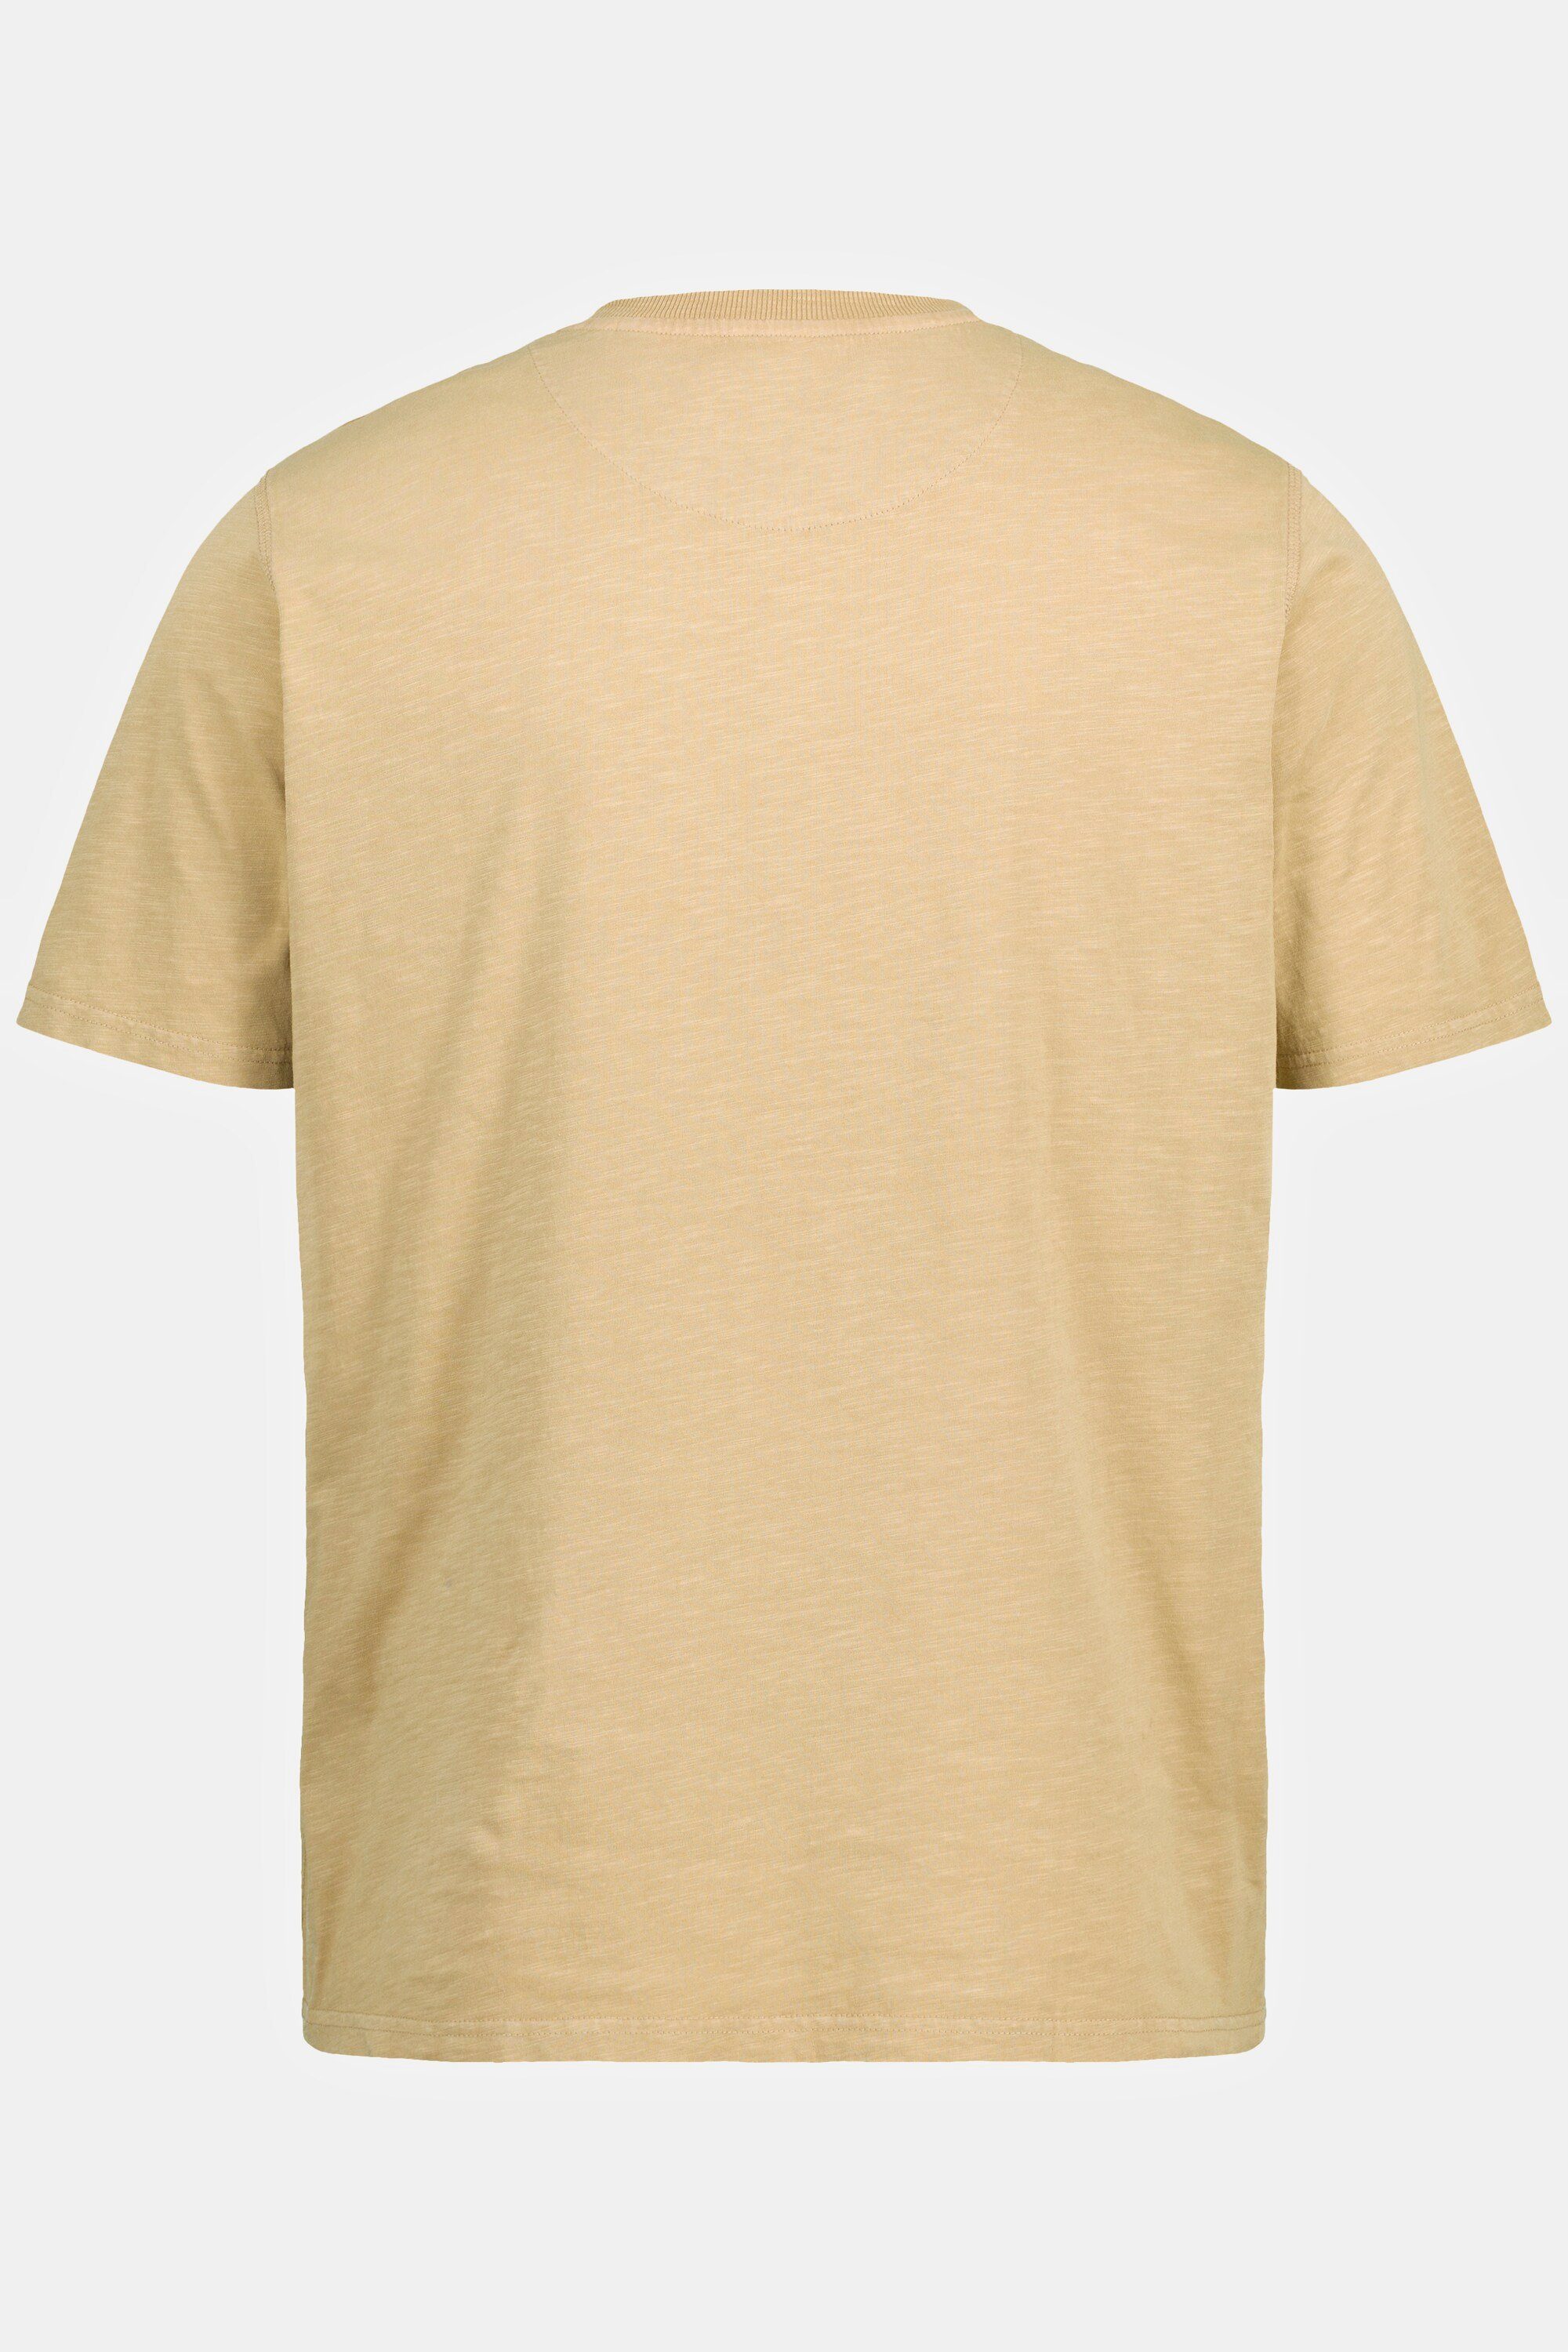 T-Shirt washed JP1880 Flamm-Jersey Halbarm T-Shirt acid